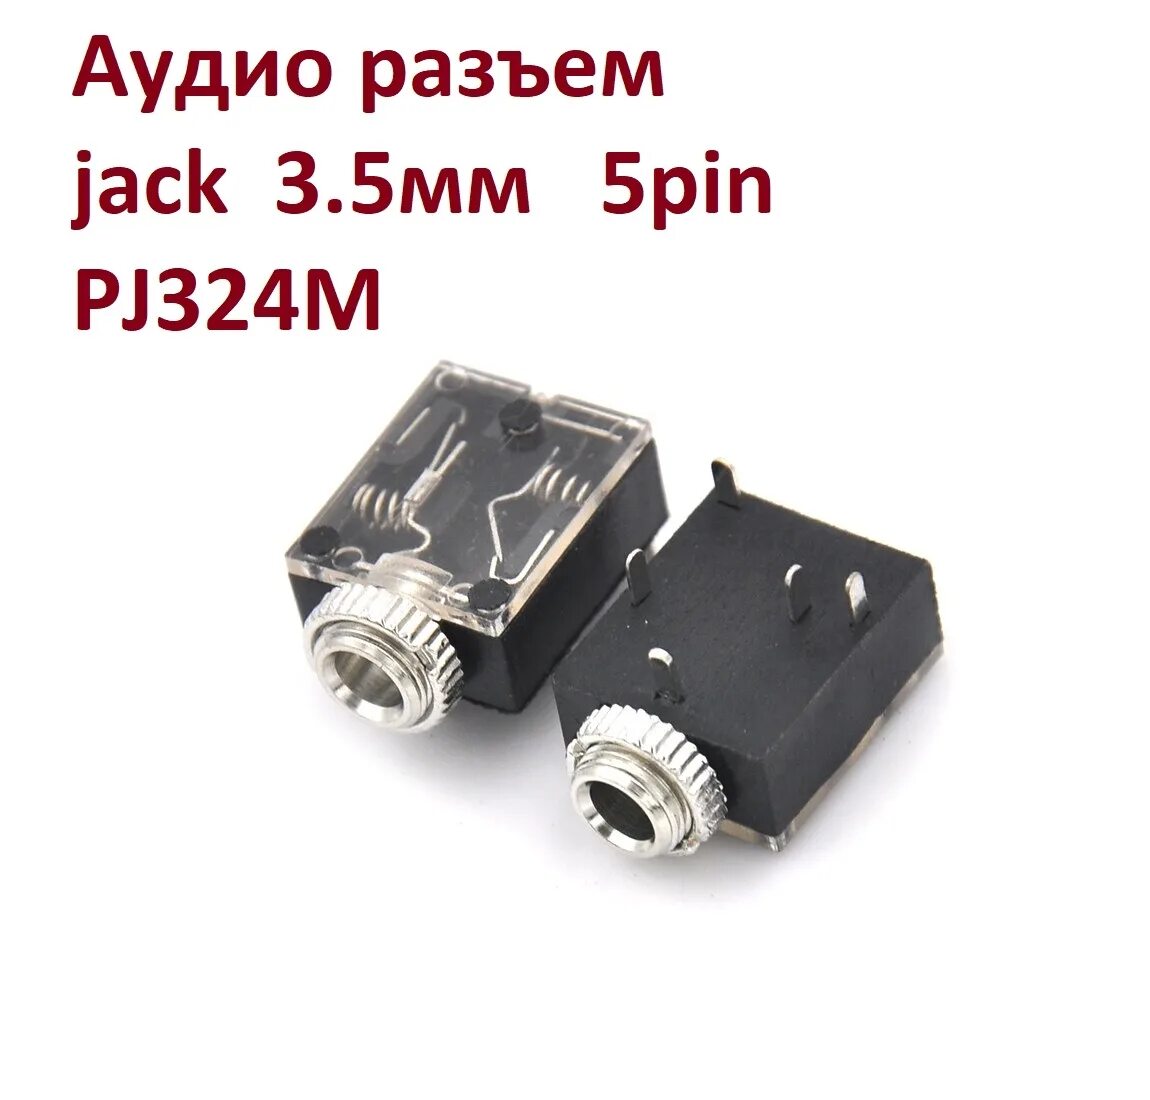 Разъем Jack 3,5 мм, стерео,"гнездо". 3.5Mm stereo Connector. 3.5 Jack гнездо разъём. Разъем аудио Jack стерео 3.5mm.